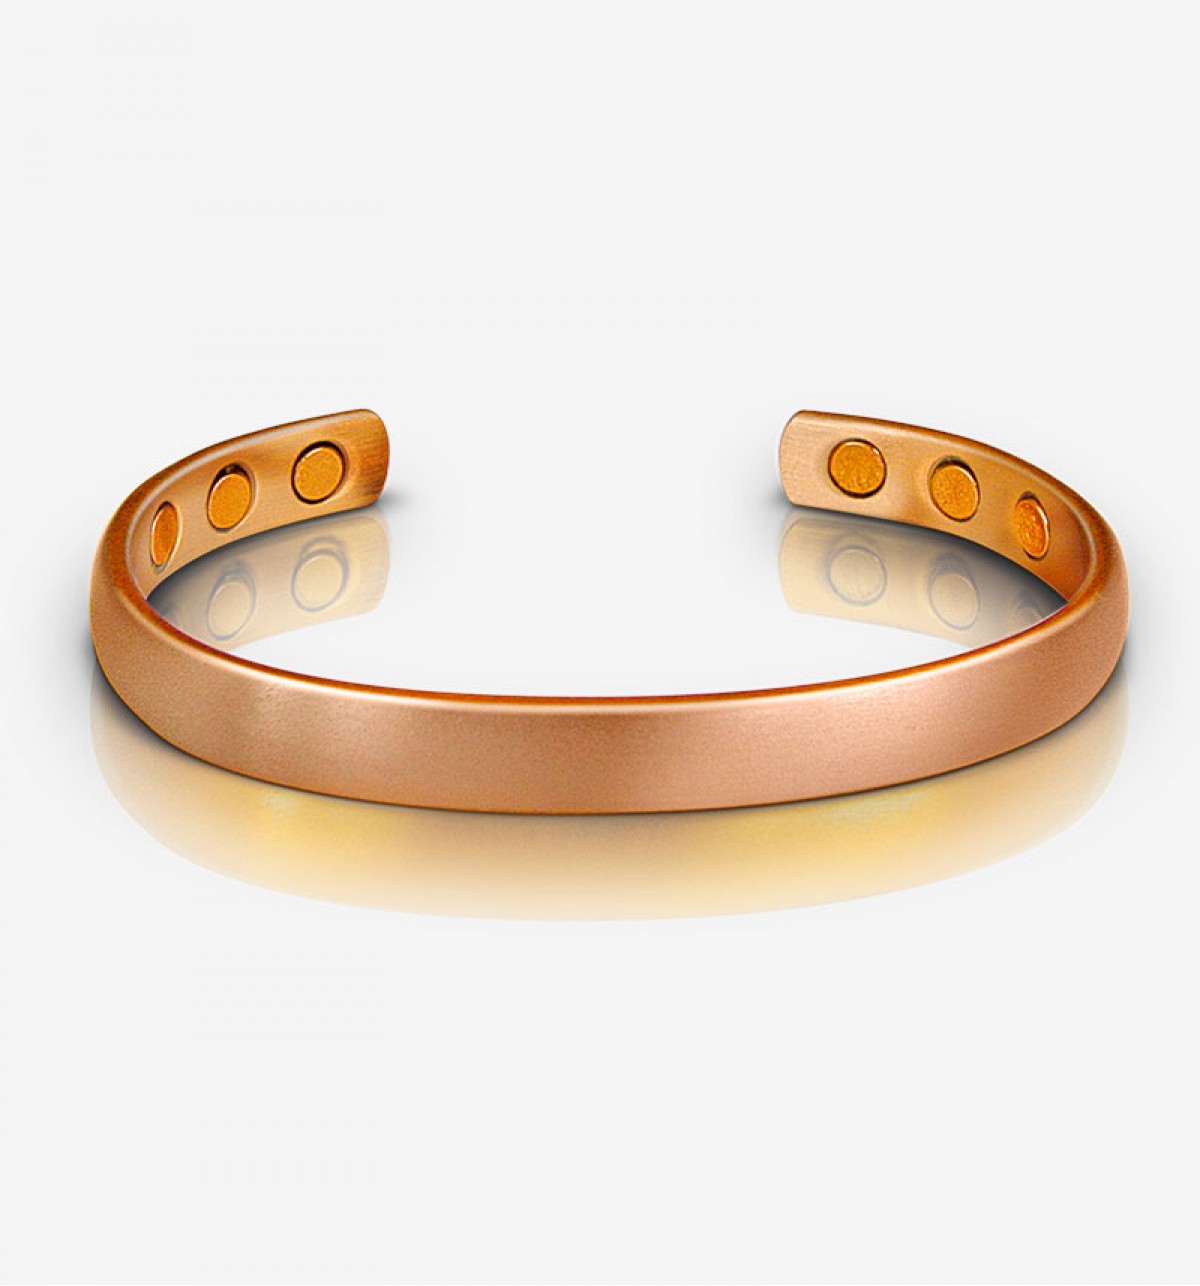 Copper Bracelet with Magnets, Copper Healing Bracelet